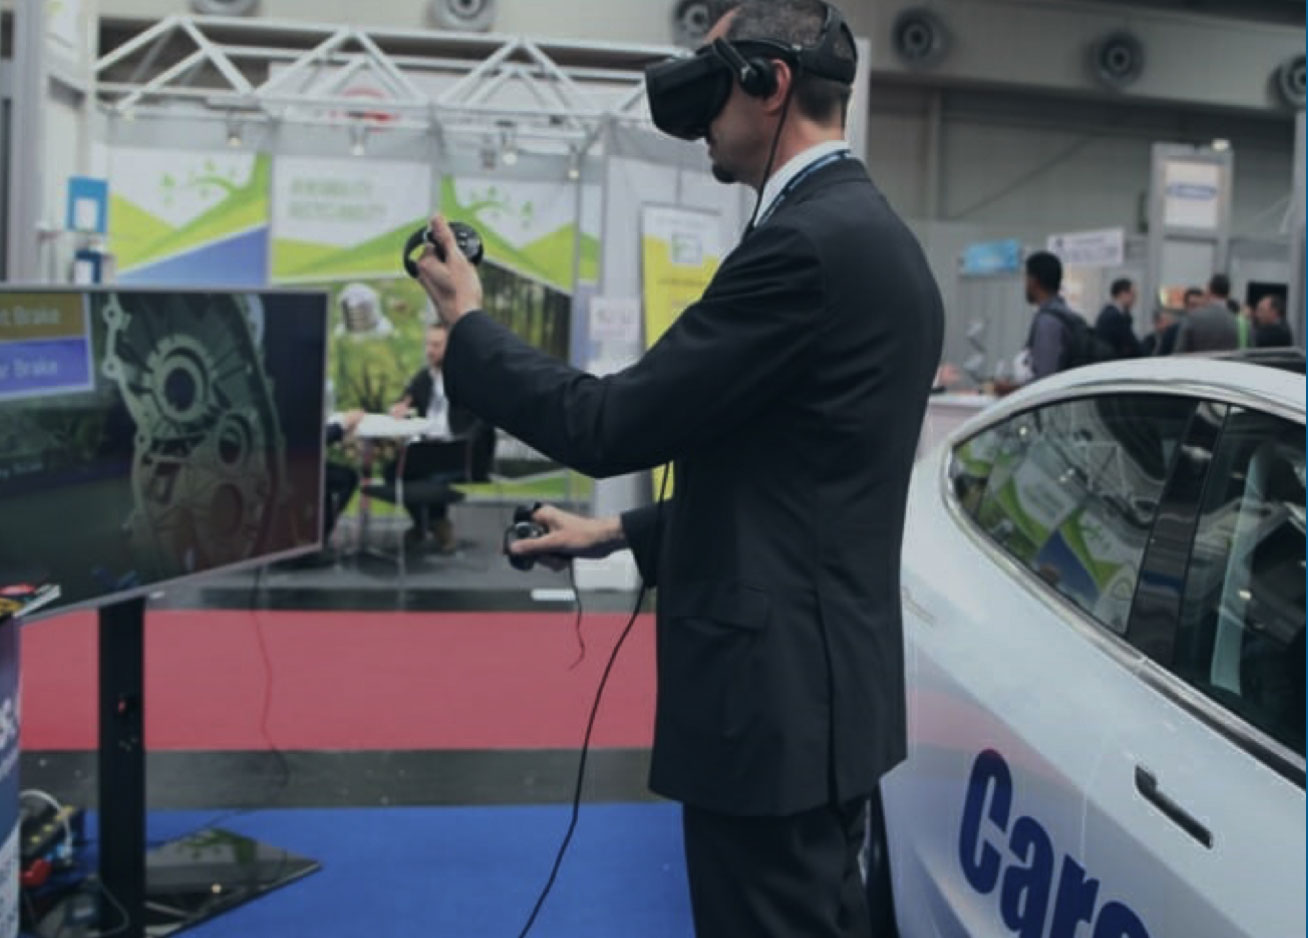 Caresoft VR demonstration